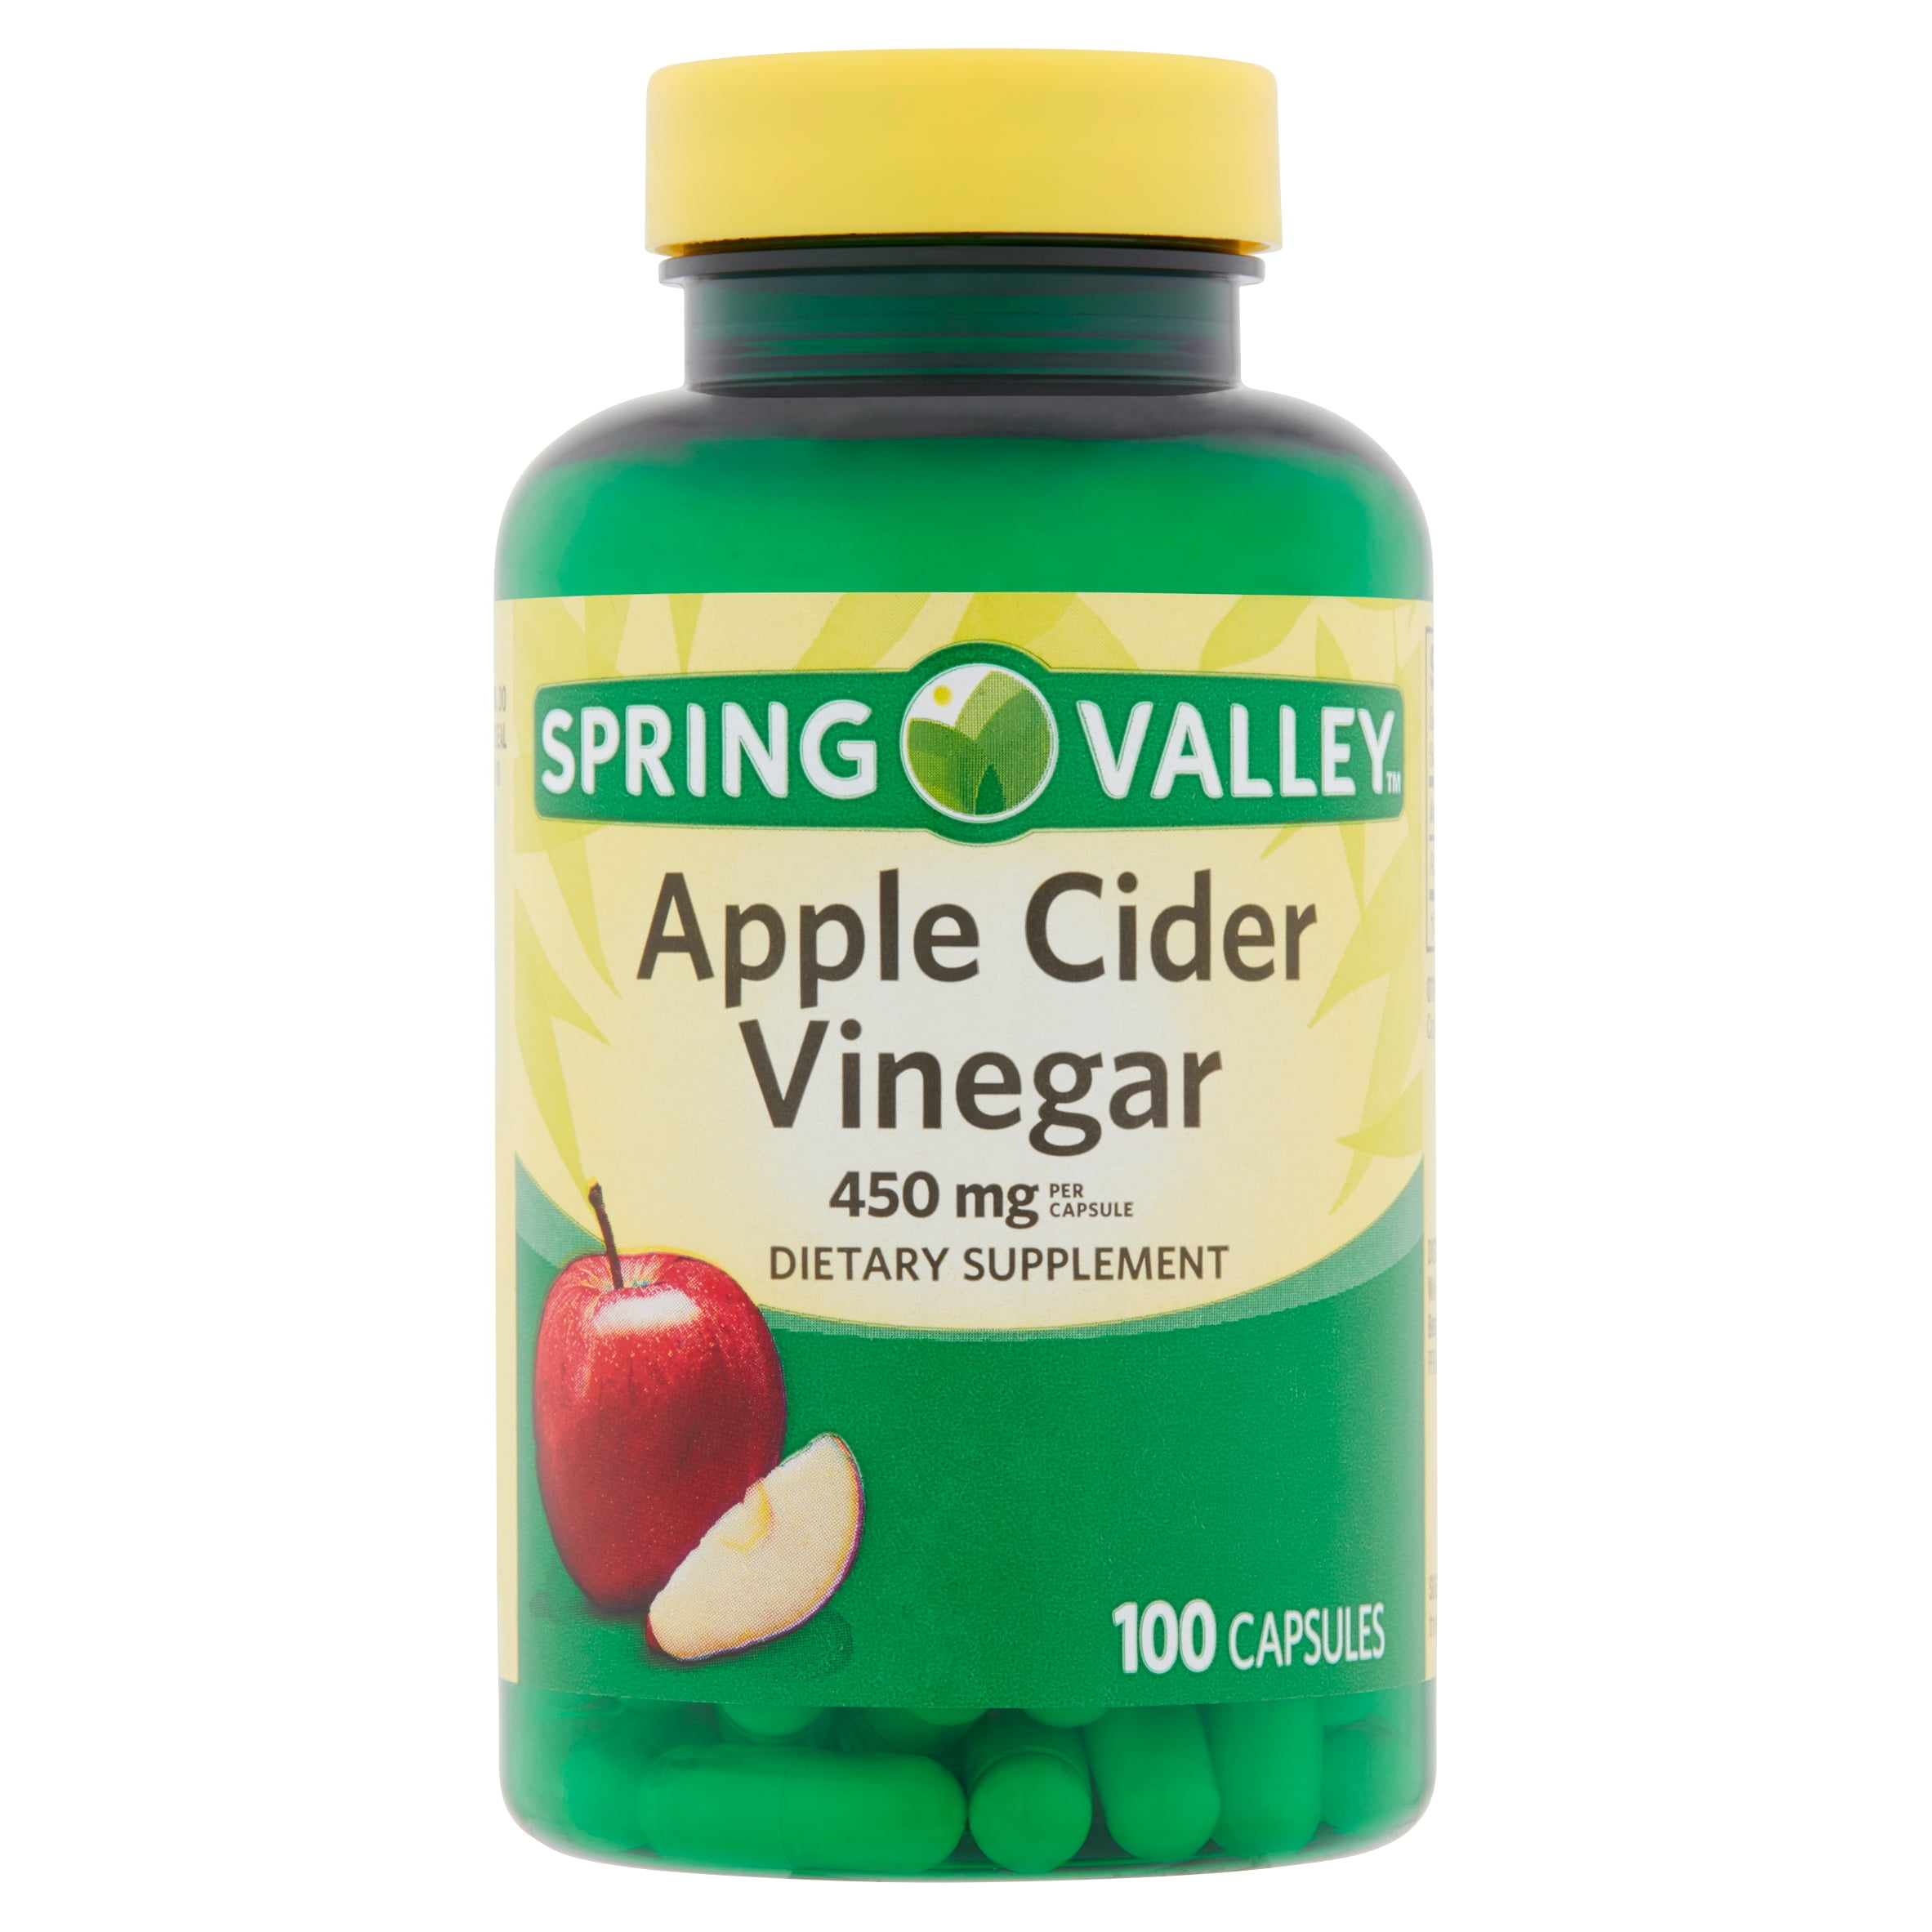 spring valley apple cider vinegar capsules, 450 mg, 100